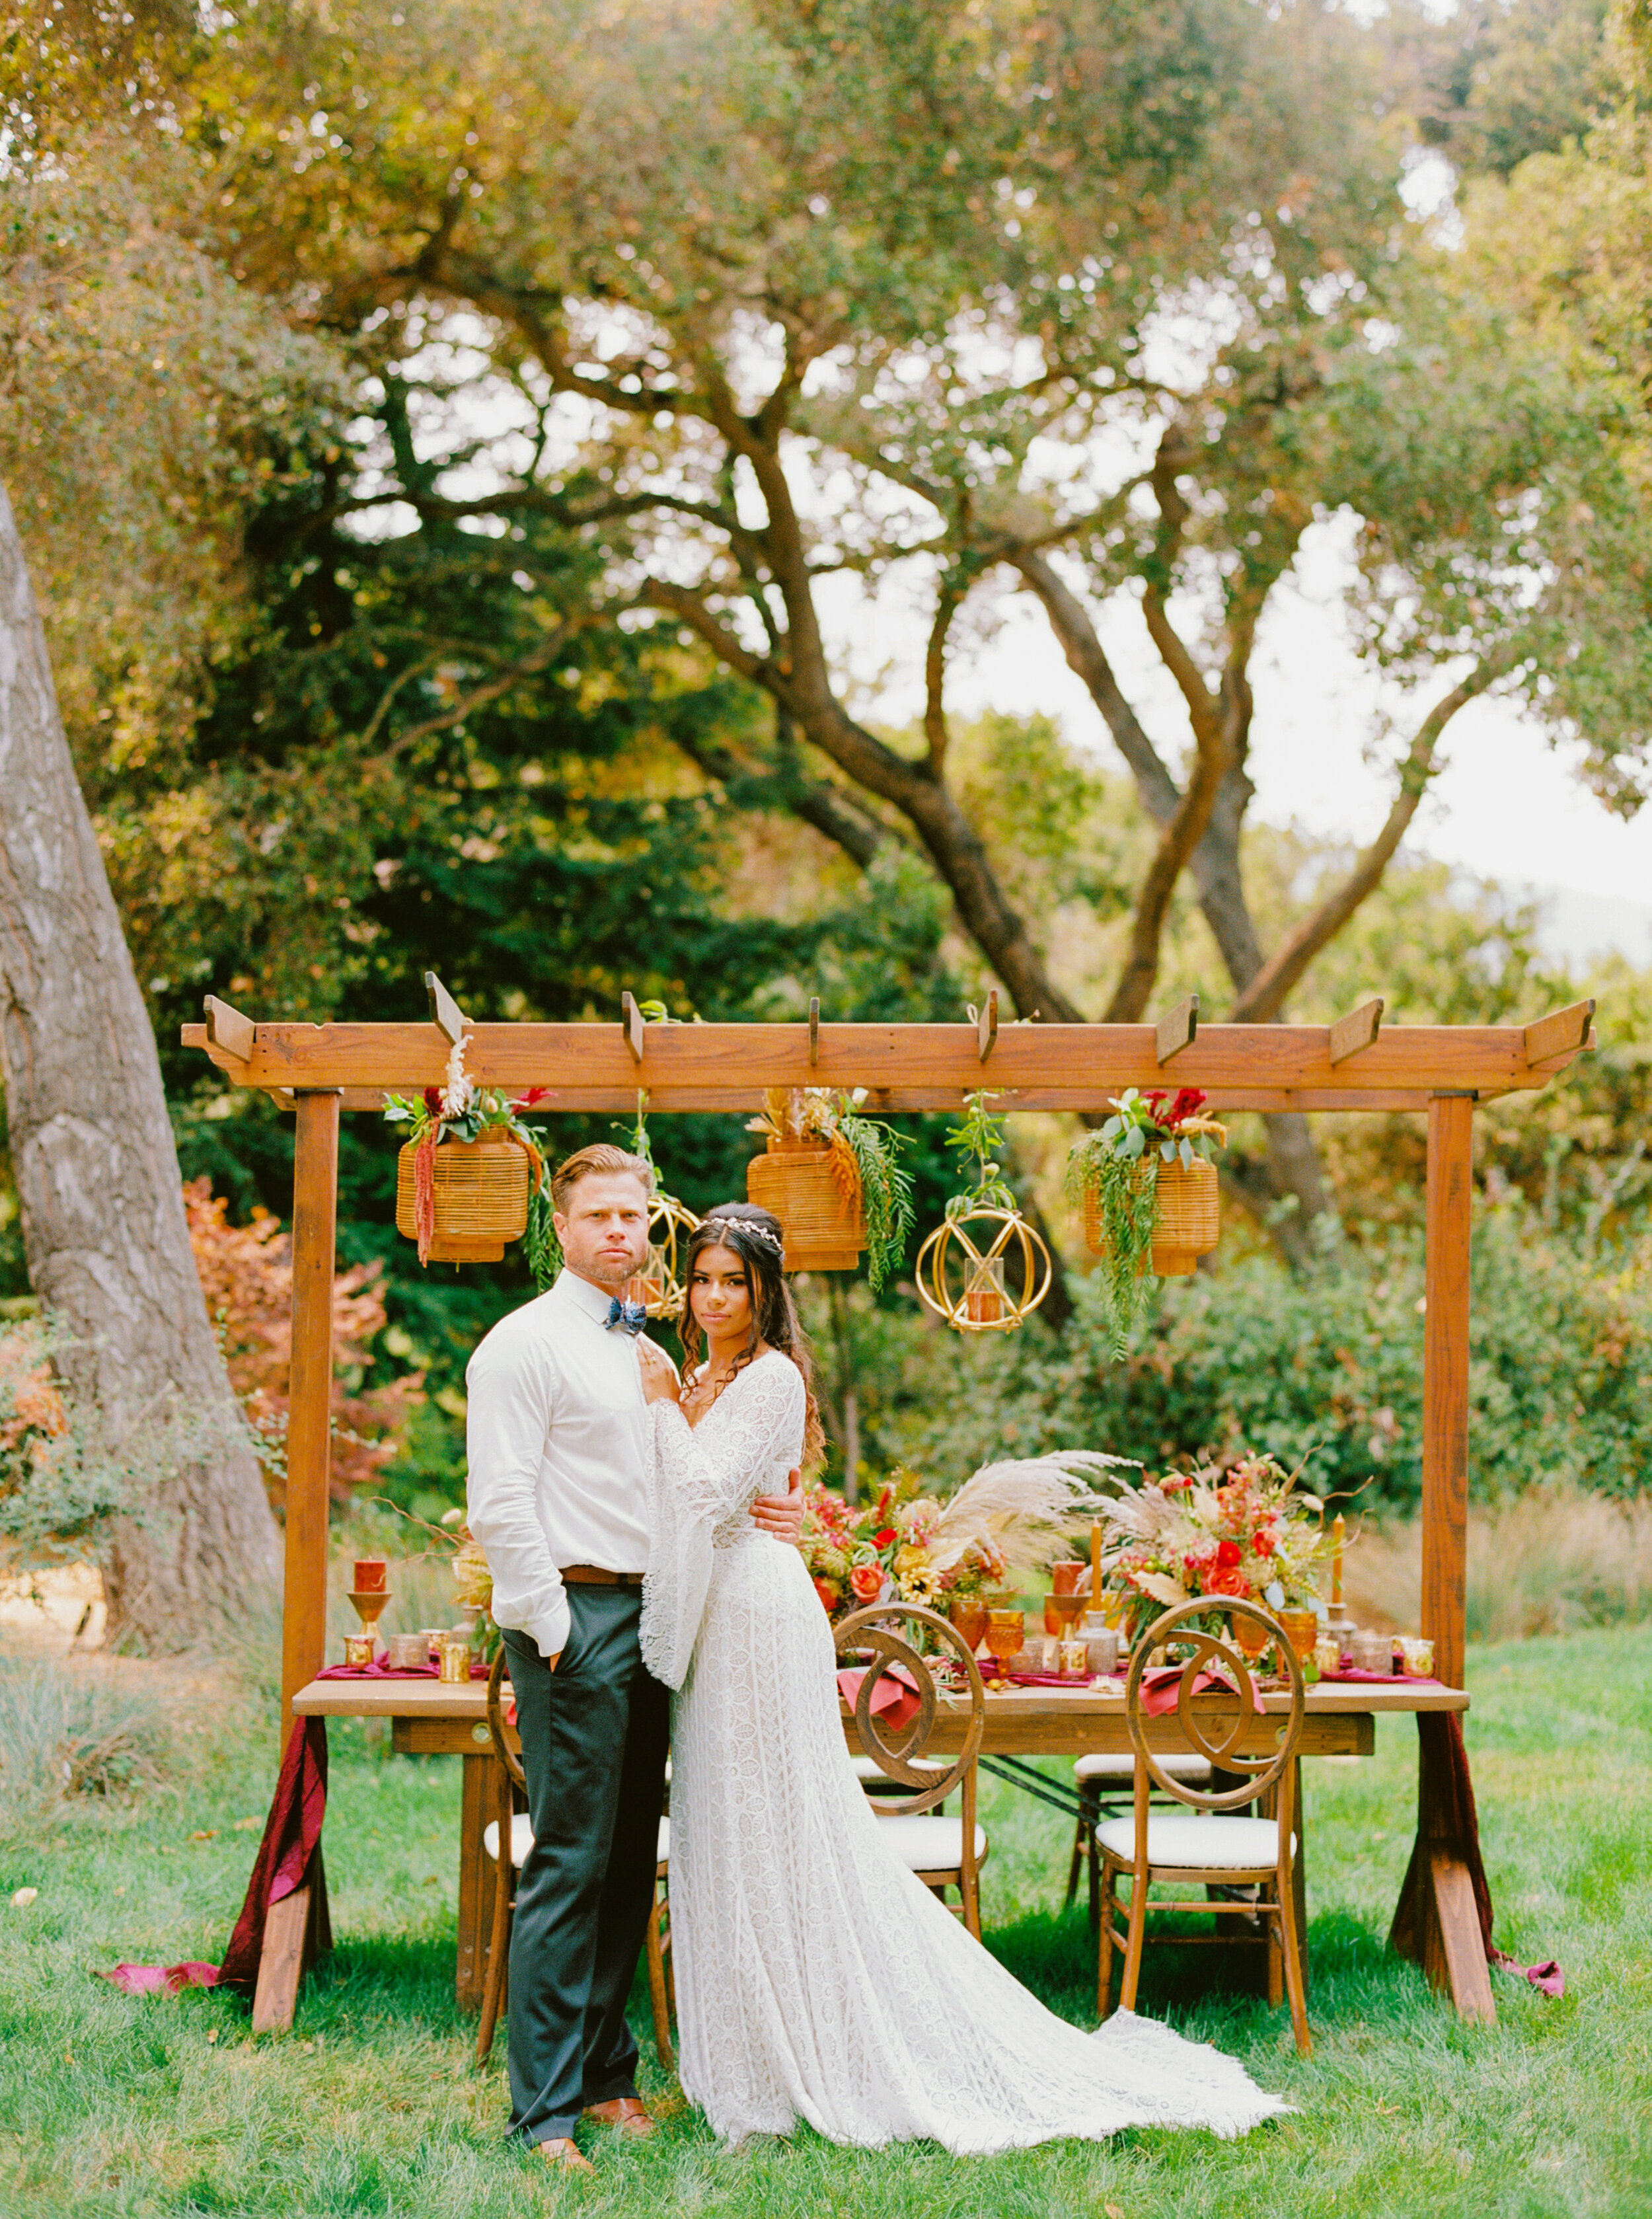 Sarahi Hadden - An Earthy Summer Boho Inspired Wedding with Sunset Hues at Gardener Ranch-84.jpg